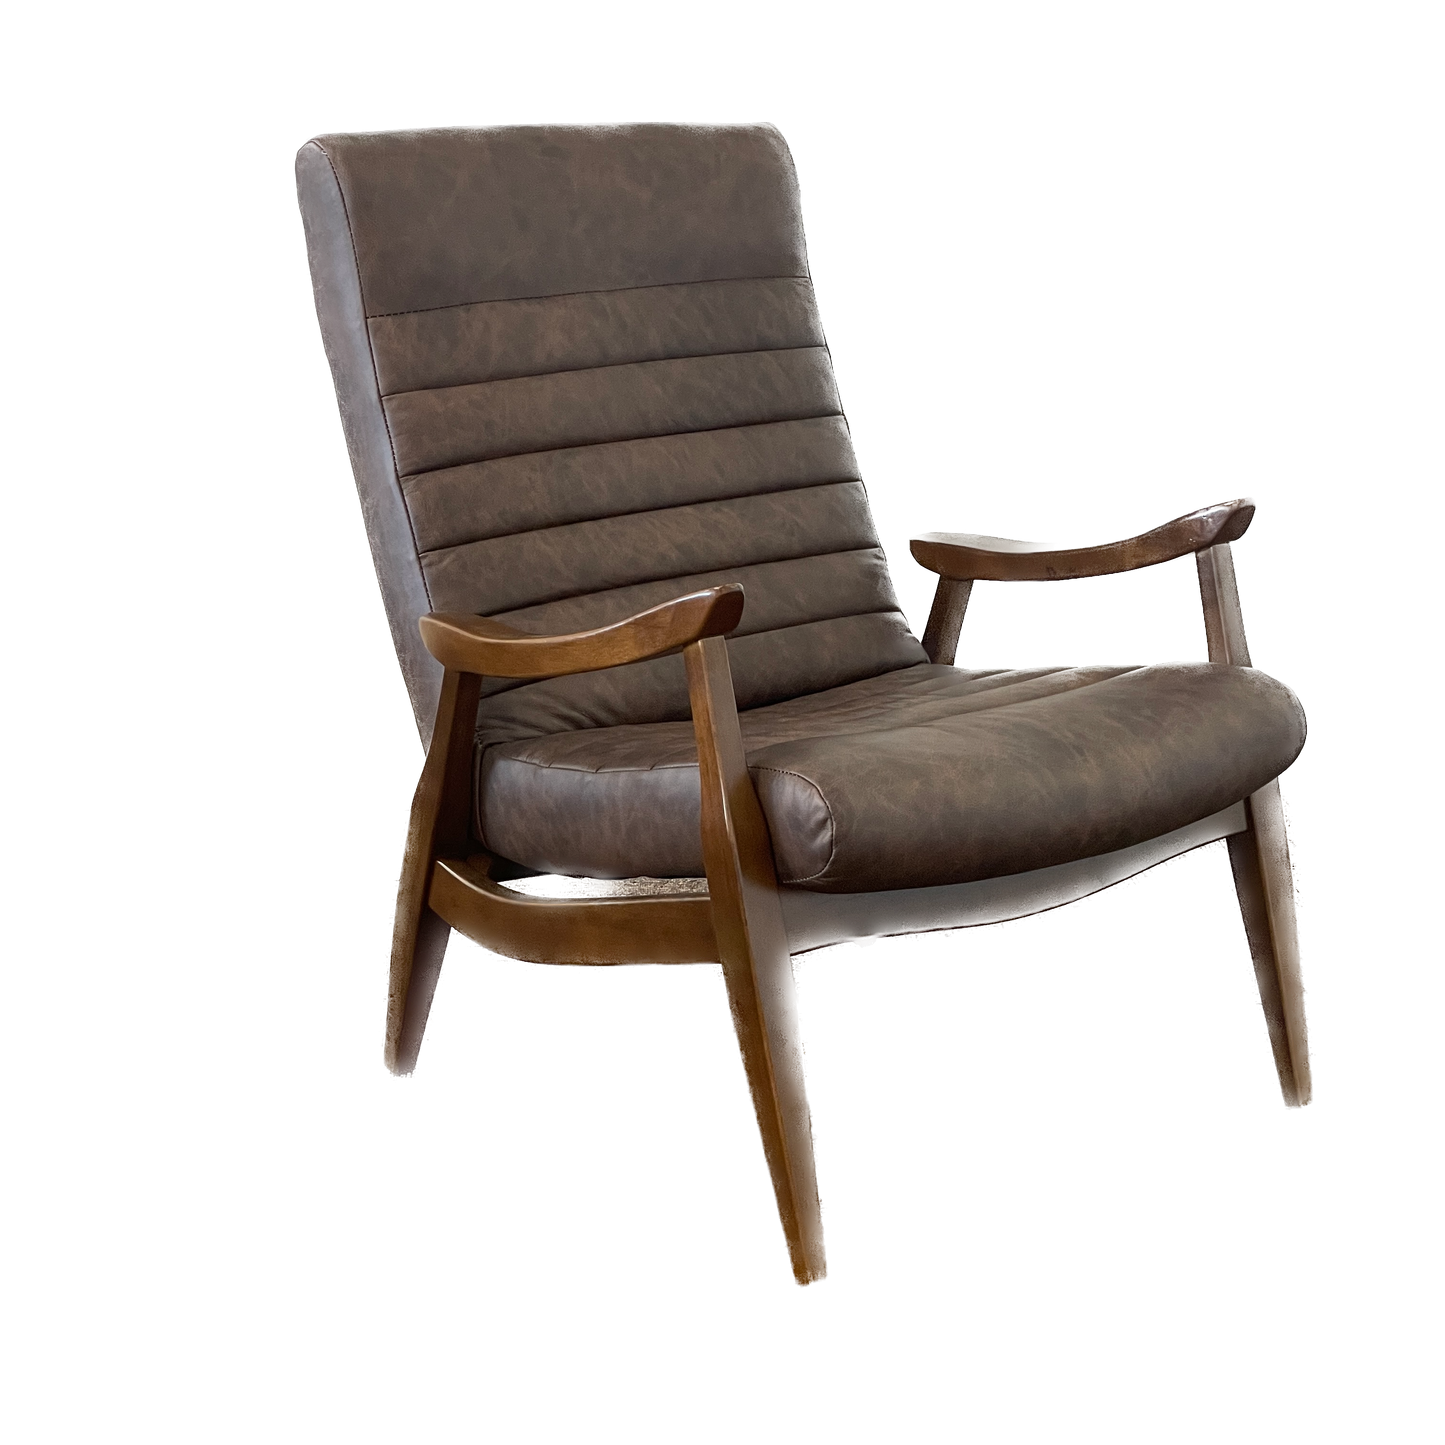 Hans Leather Chair & Ottoman